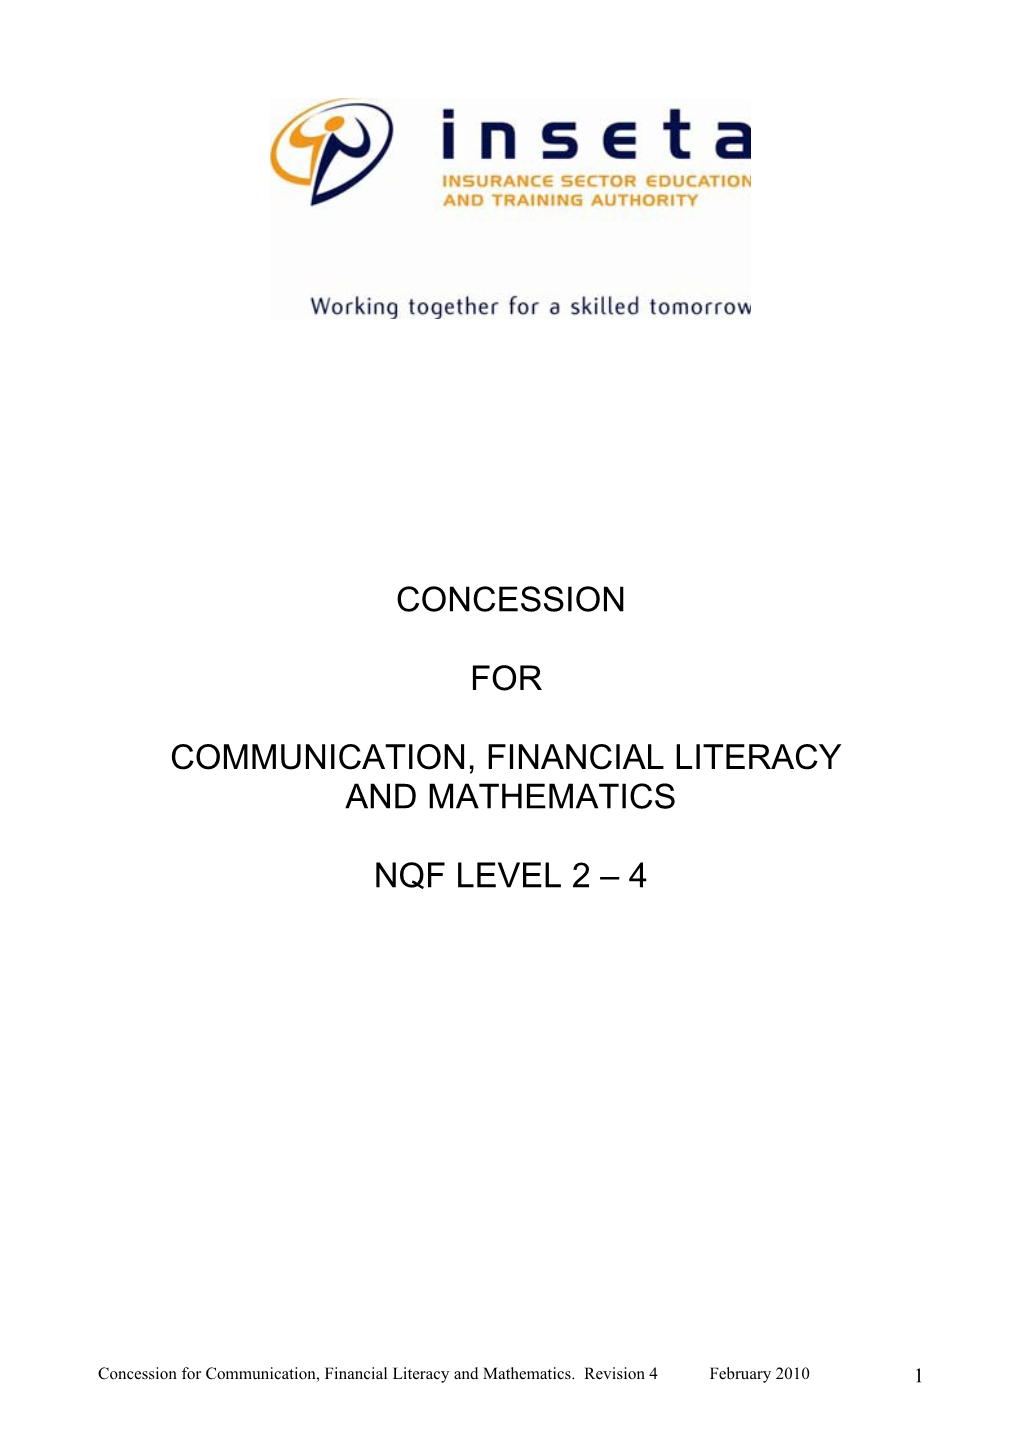 Communication, Financial Literacy